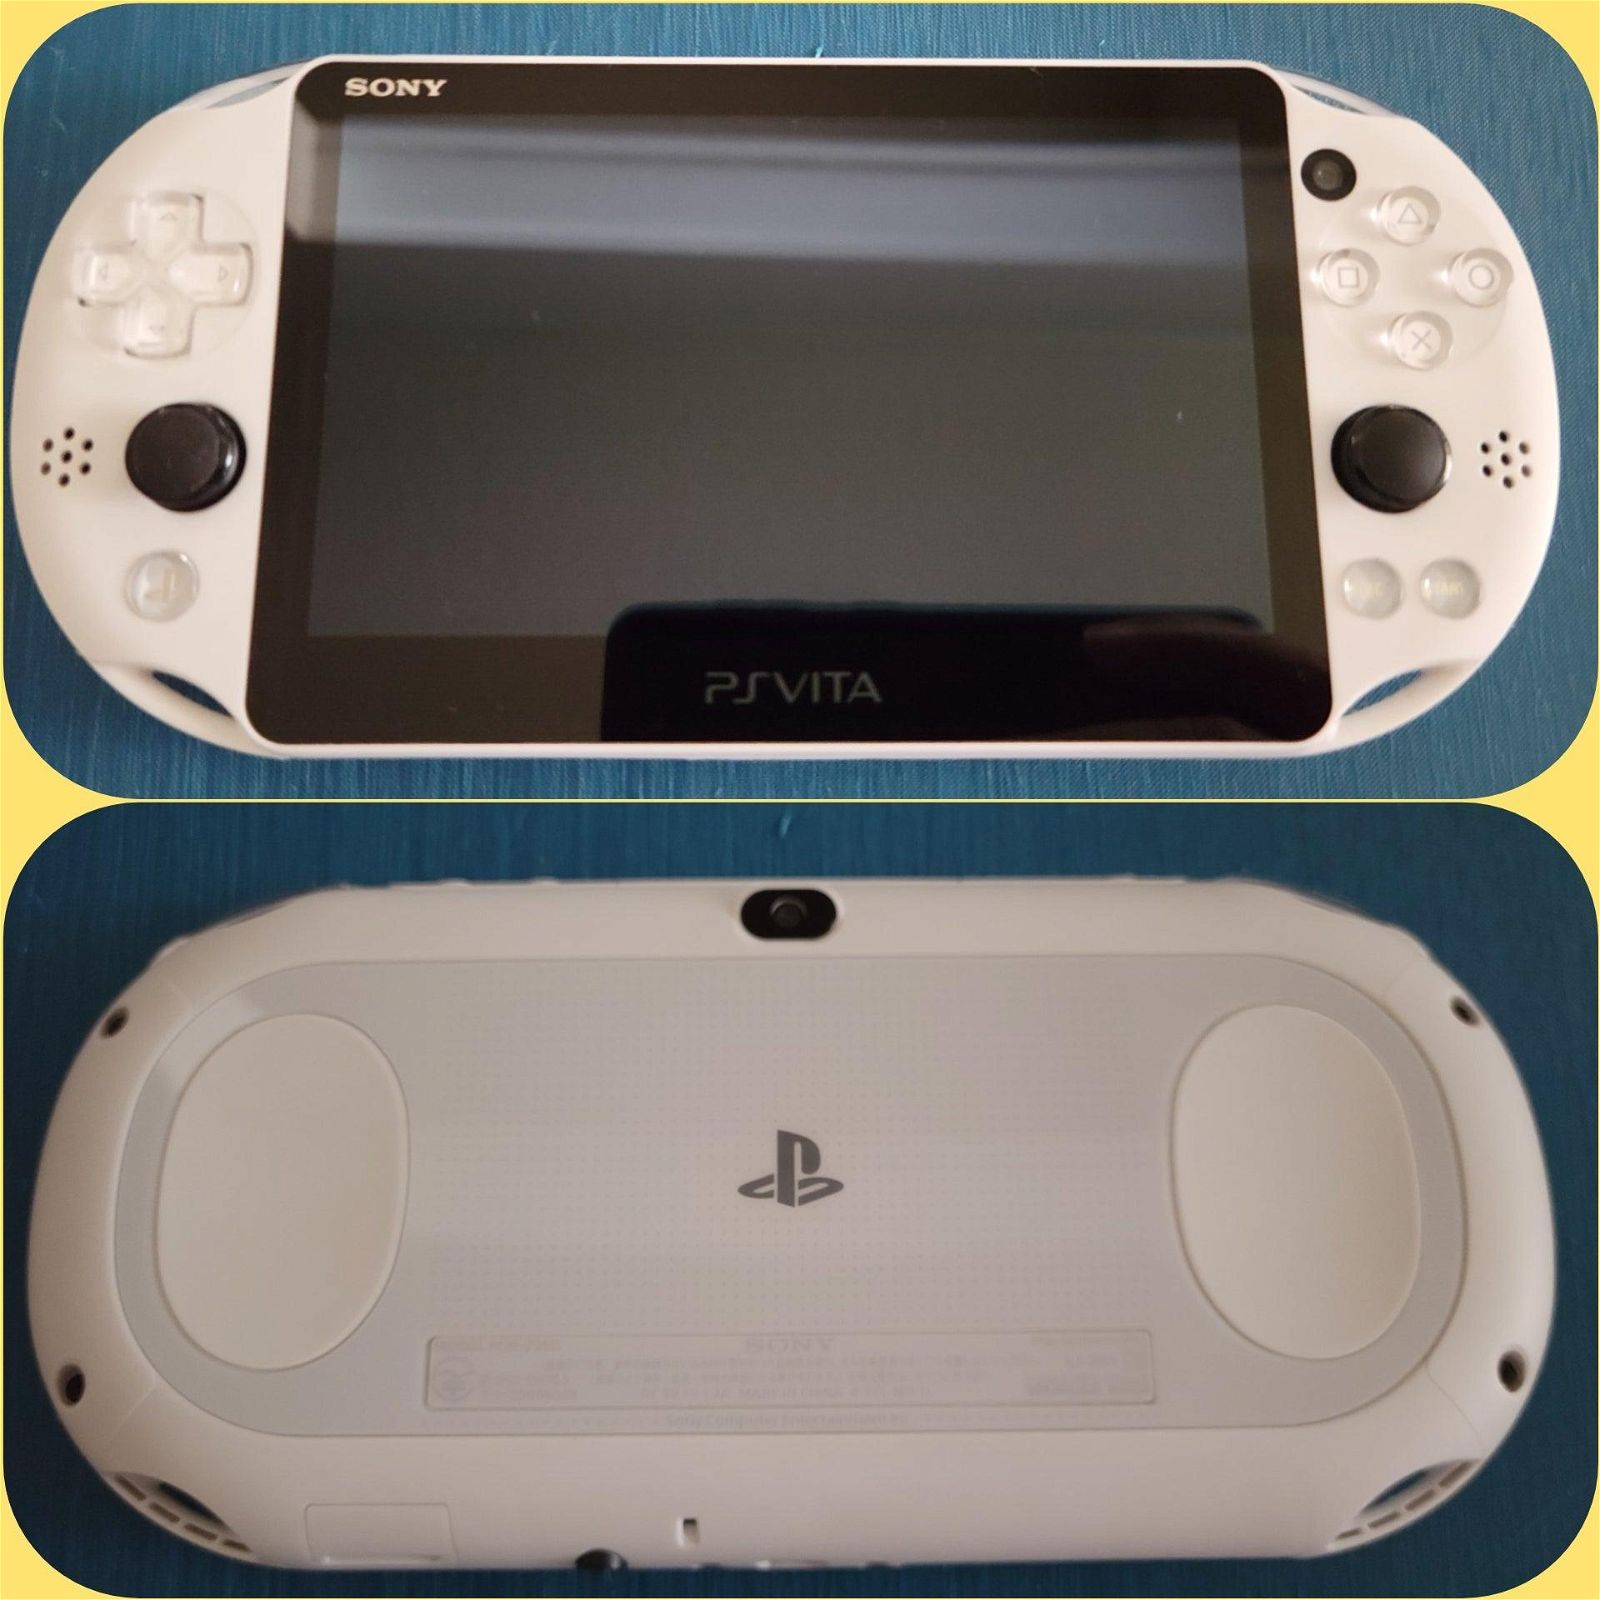 Custom modified jailbreak PlayStation PS Vita 1000 u0026 2000 consoles